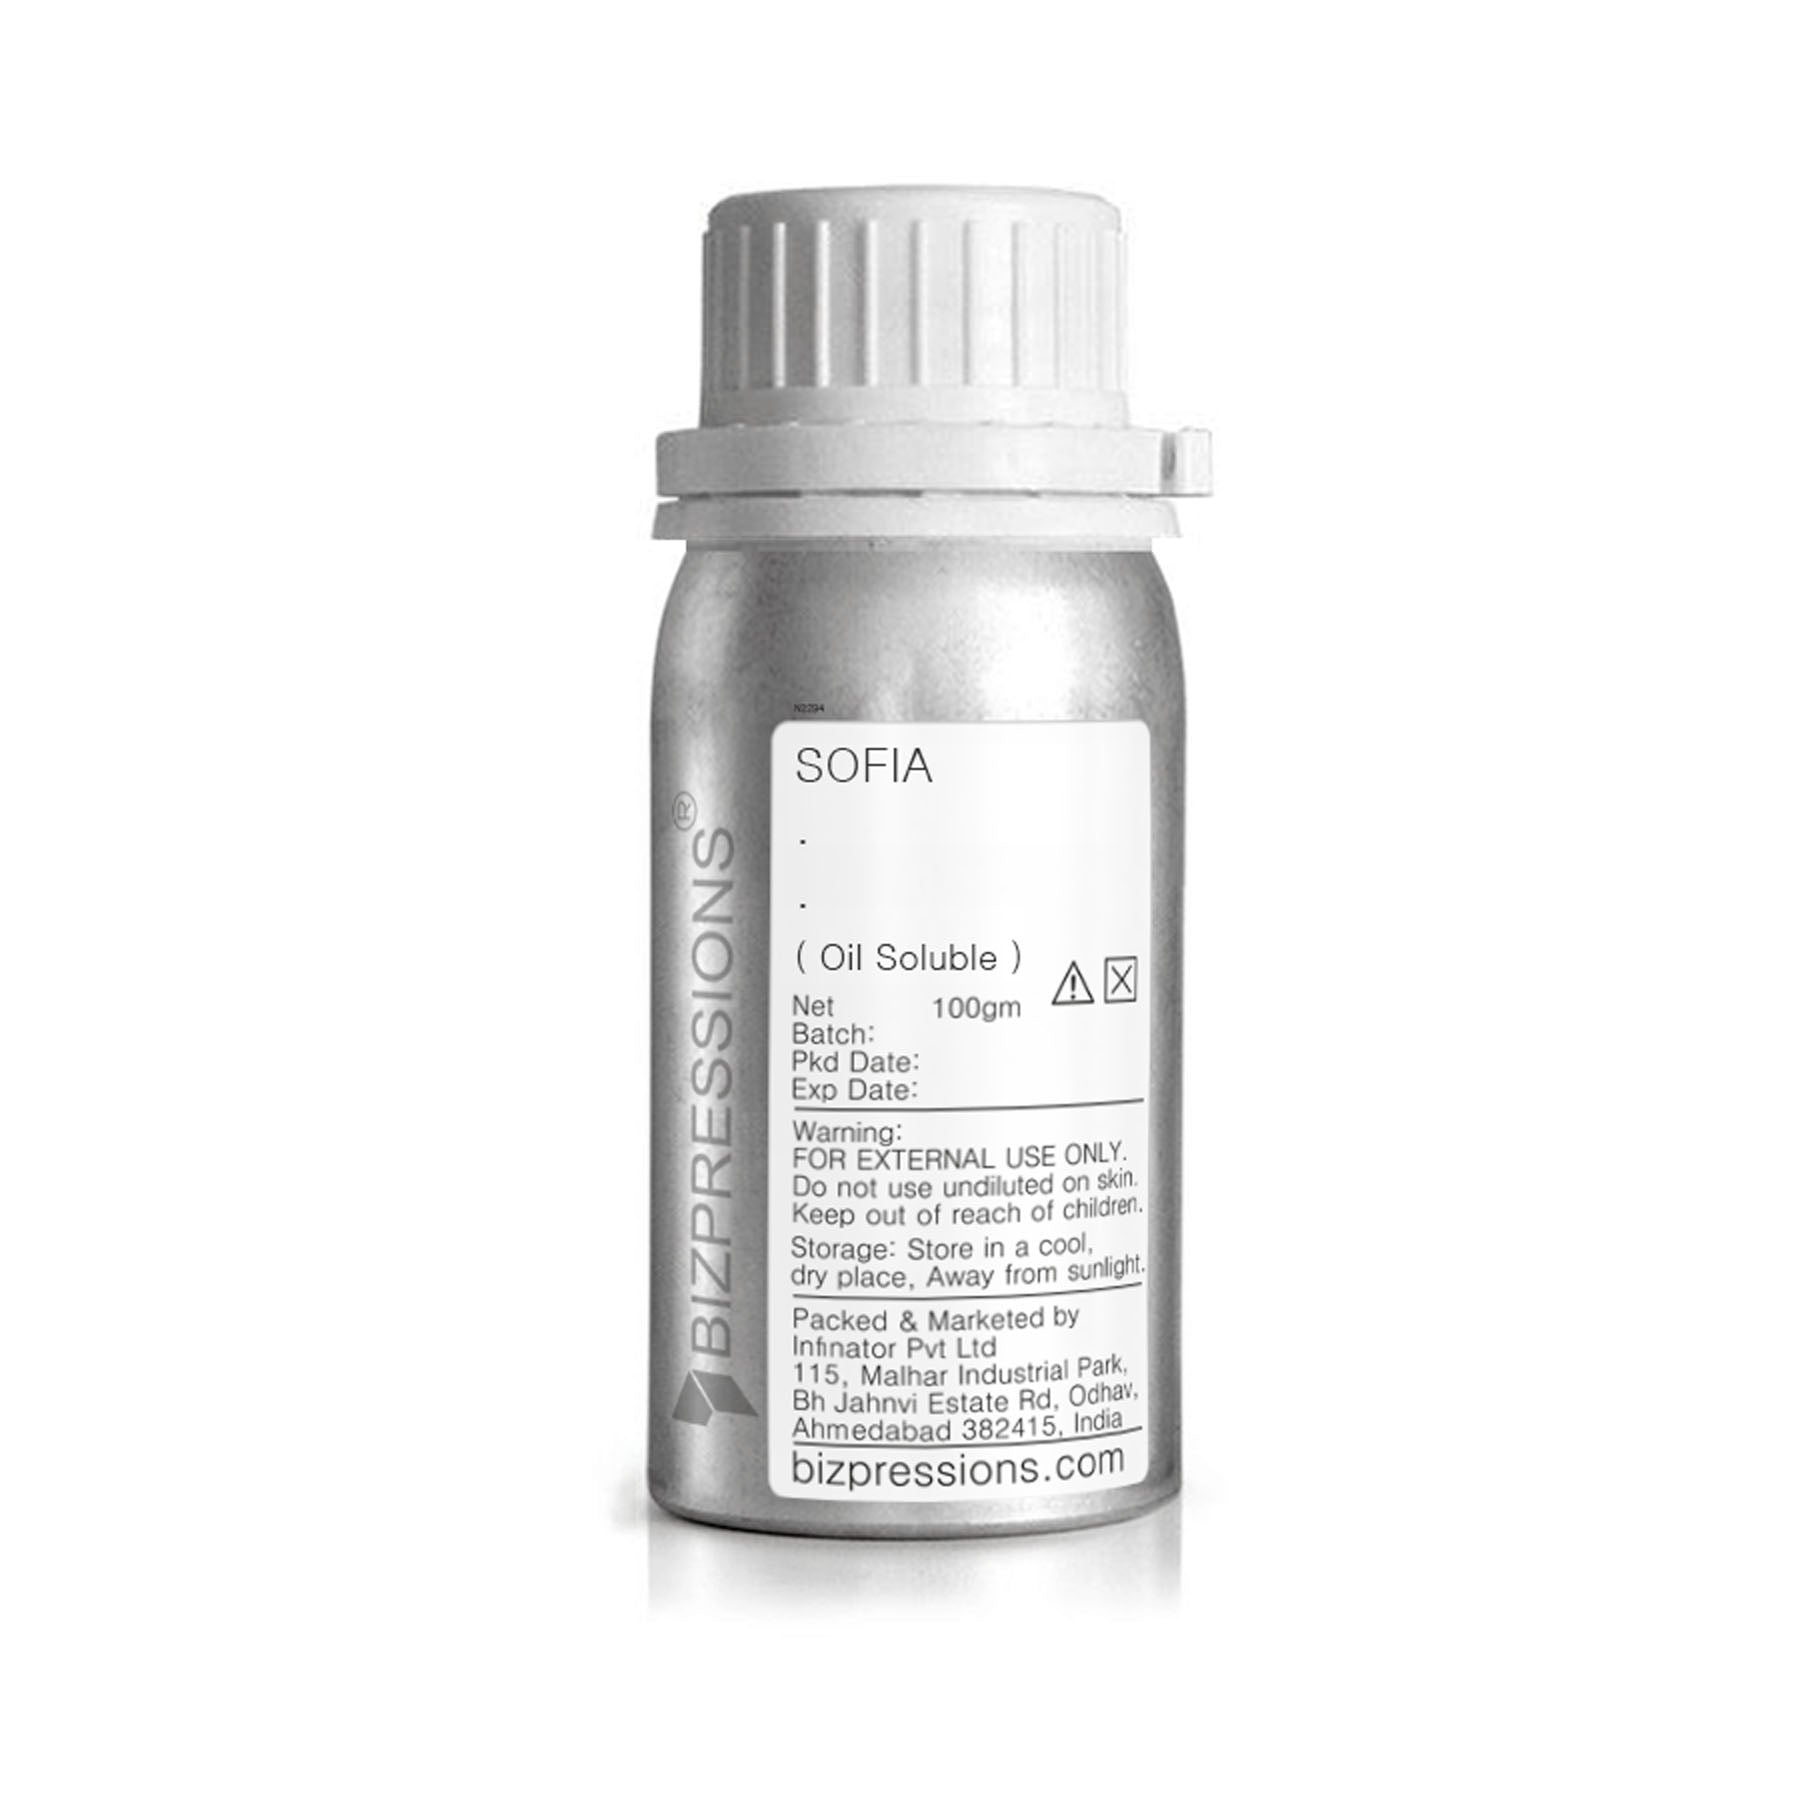 SOFIA - Fragrance ( Oil Soluble ) - 100 gm